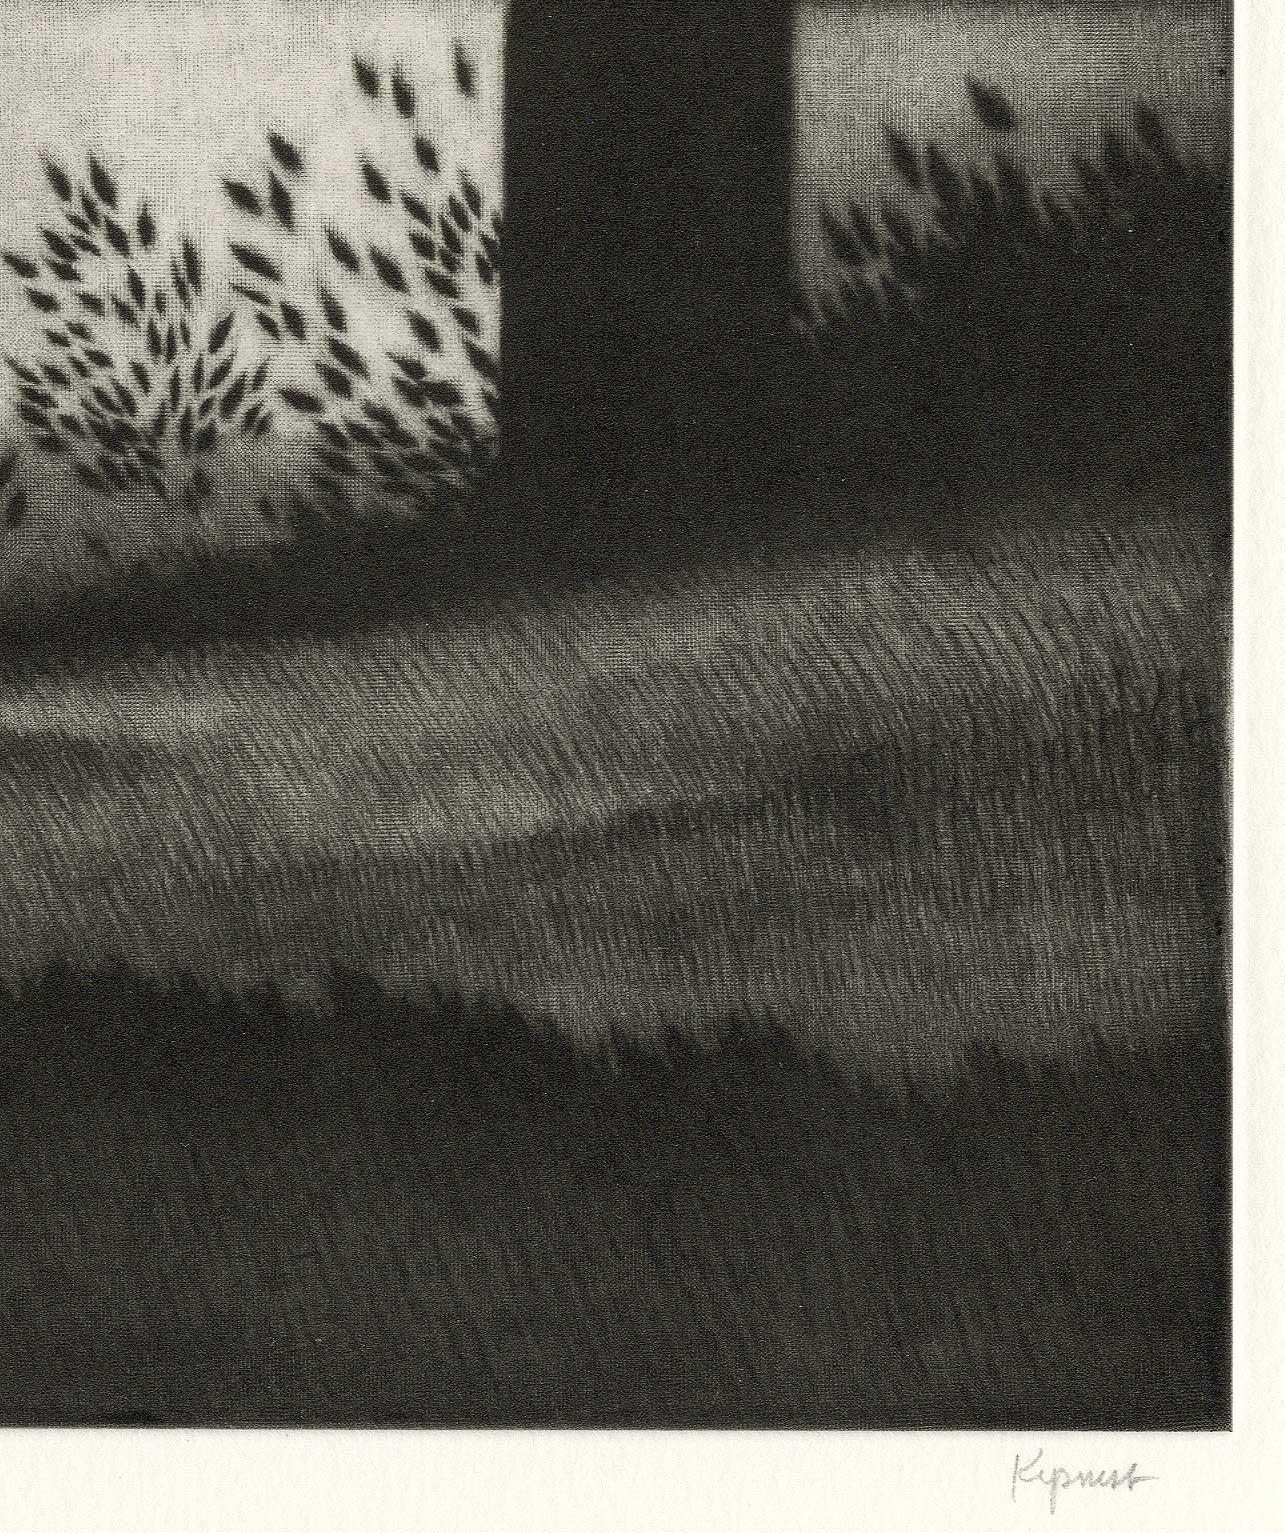 Evening with White Porch (a calm suburban setting) - Black Still-Life Print by Robert Kipniss